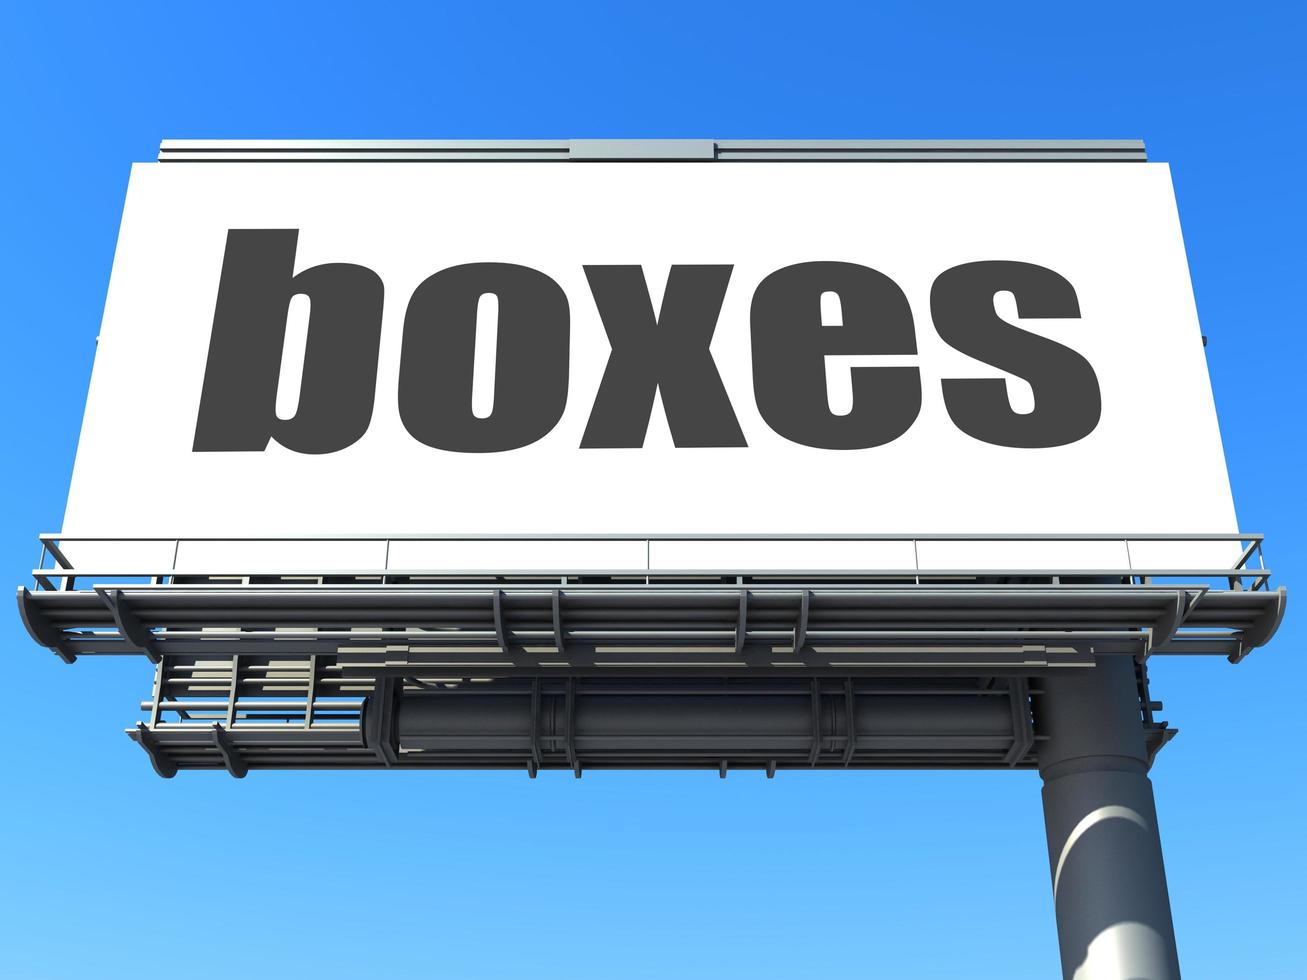 boxes word on billboard photo